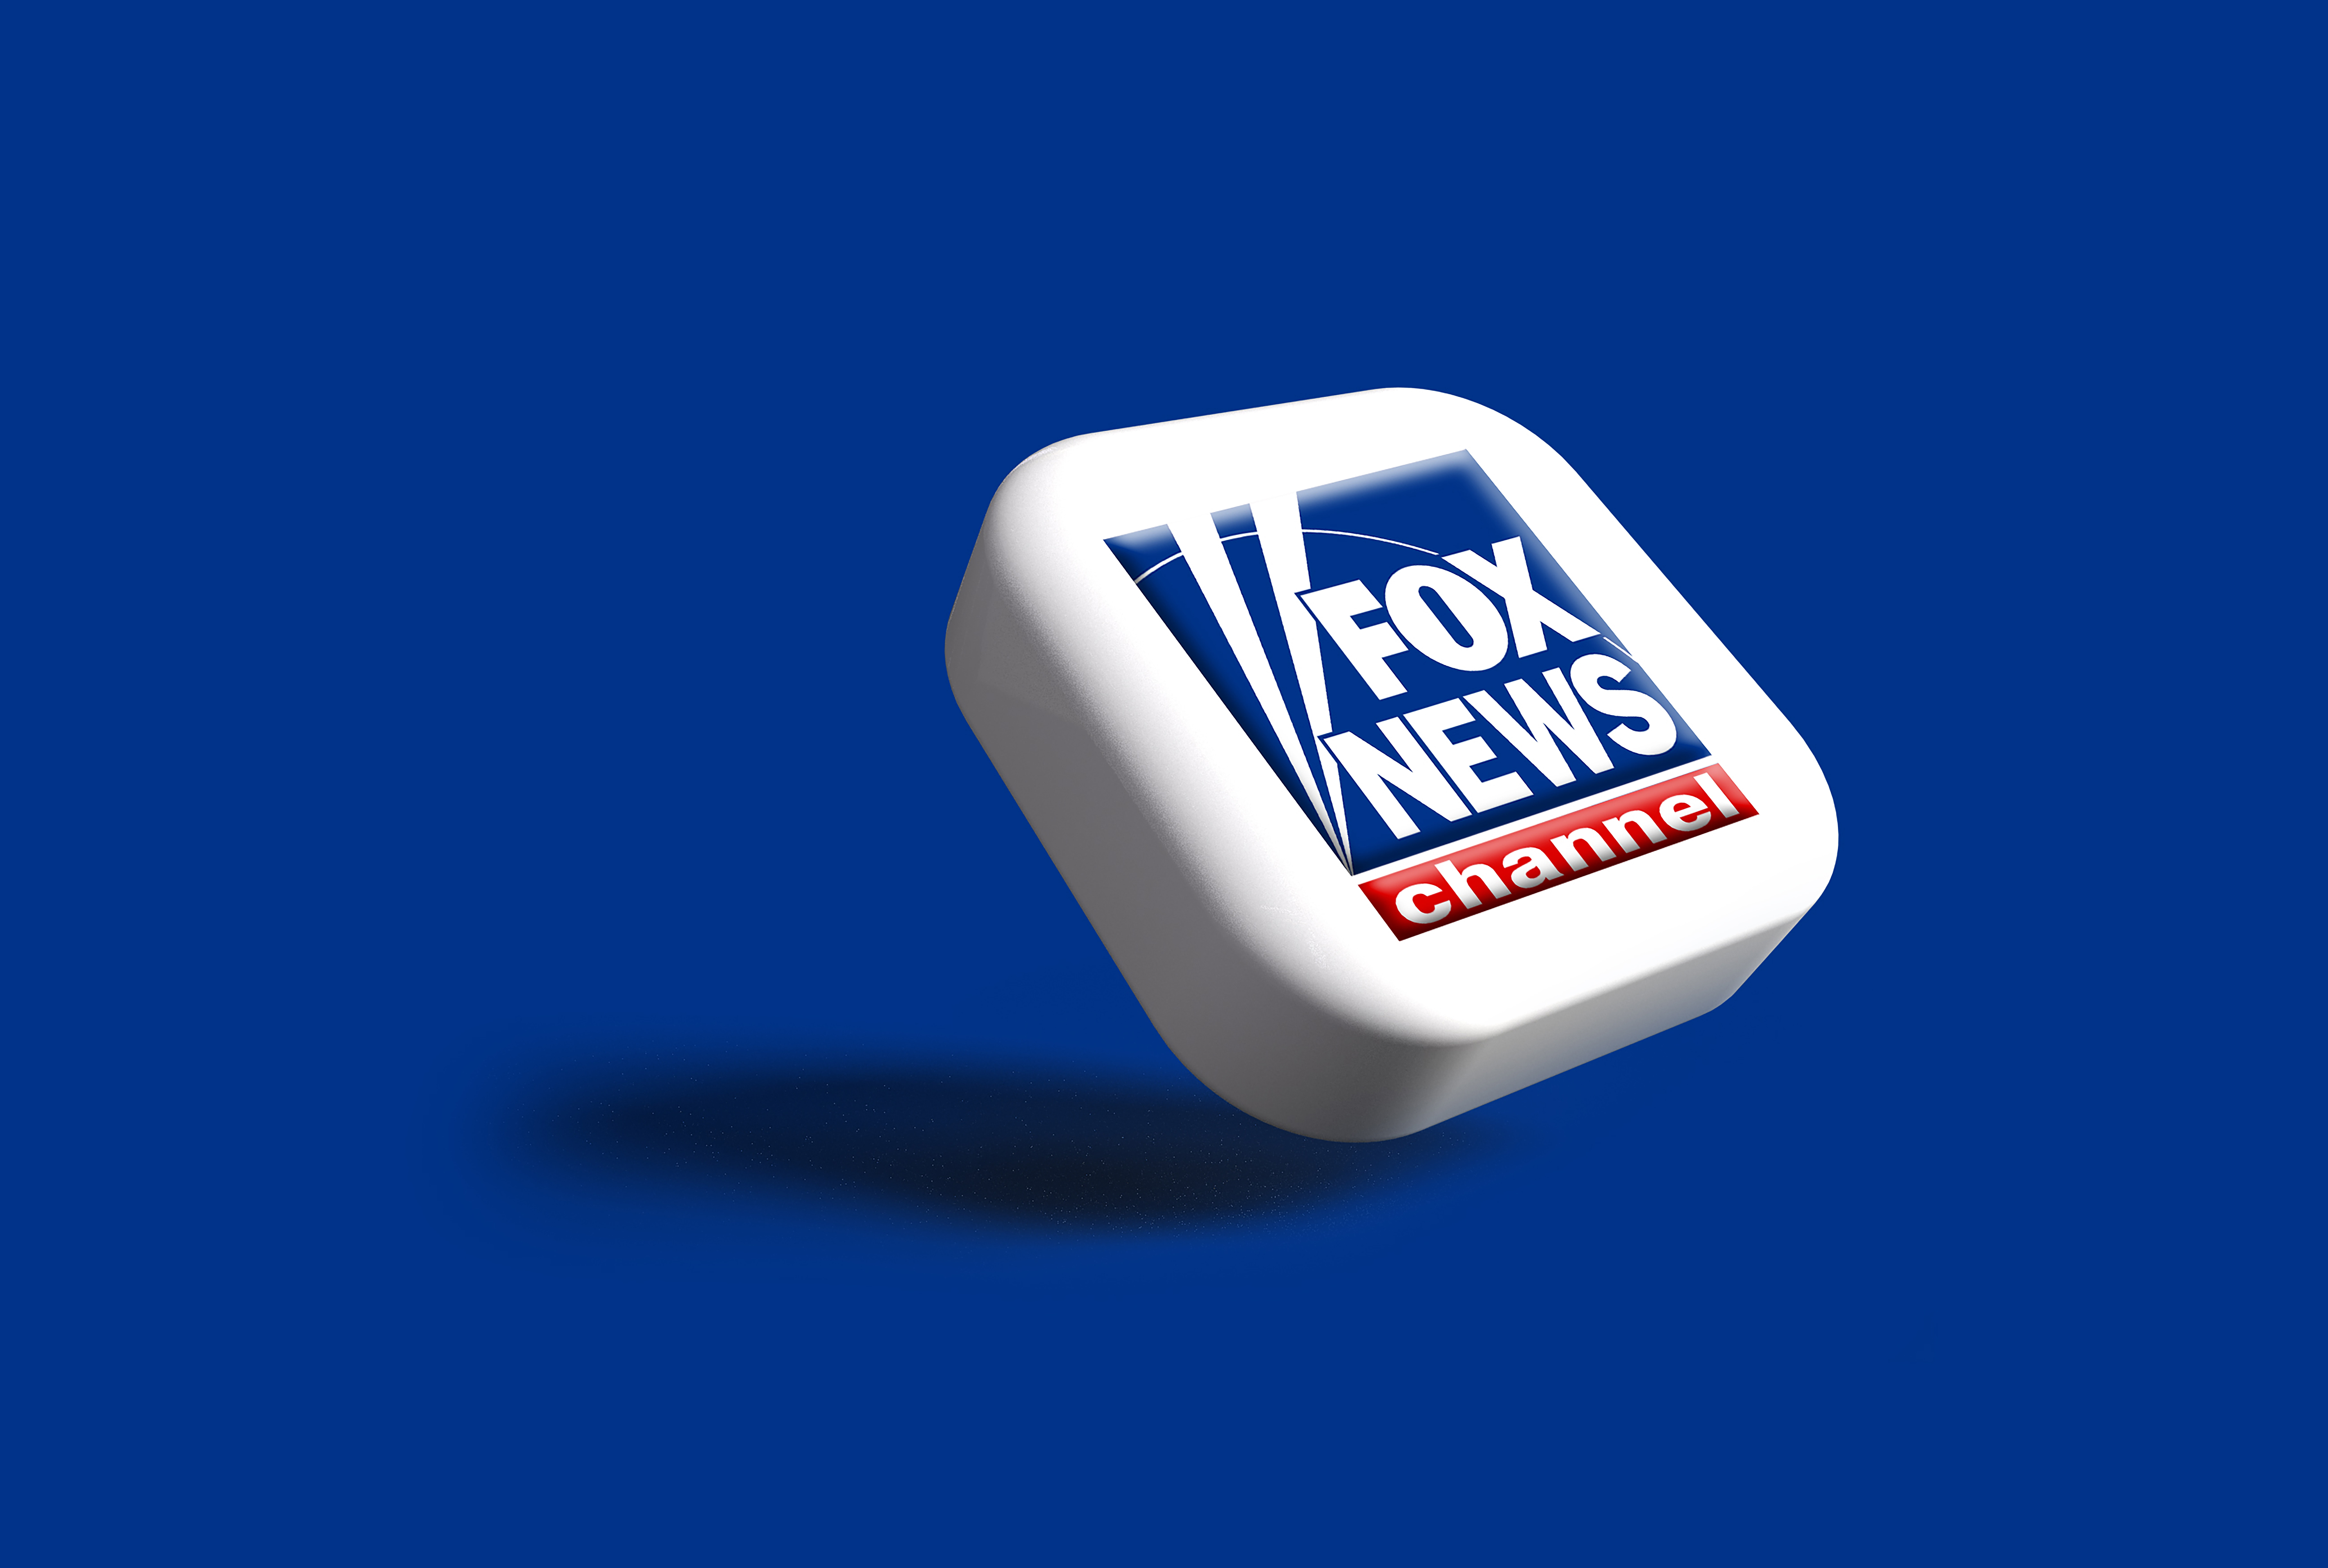 Fox News logo on blue background